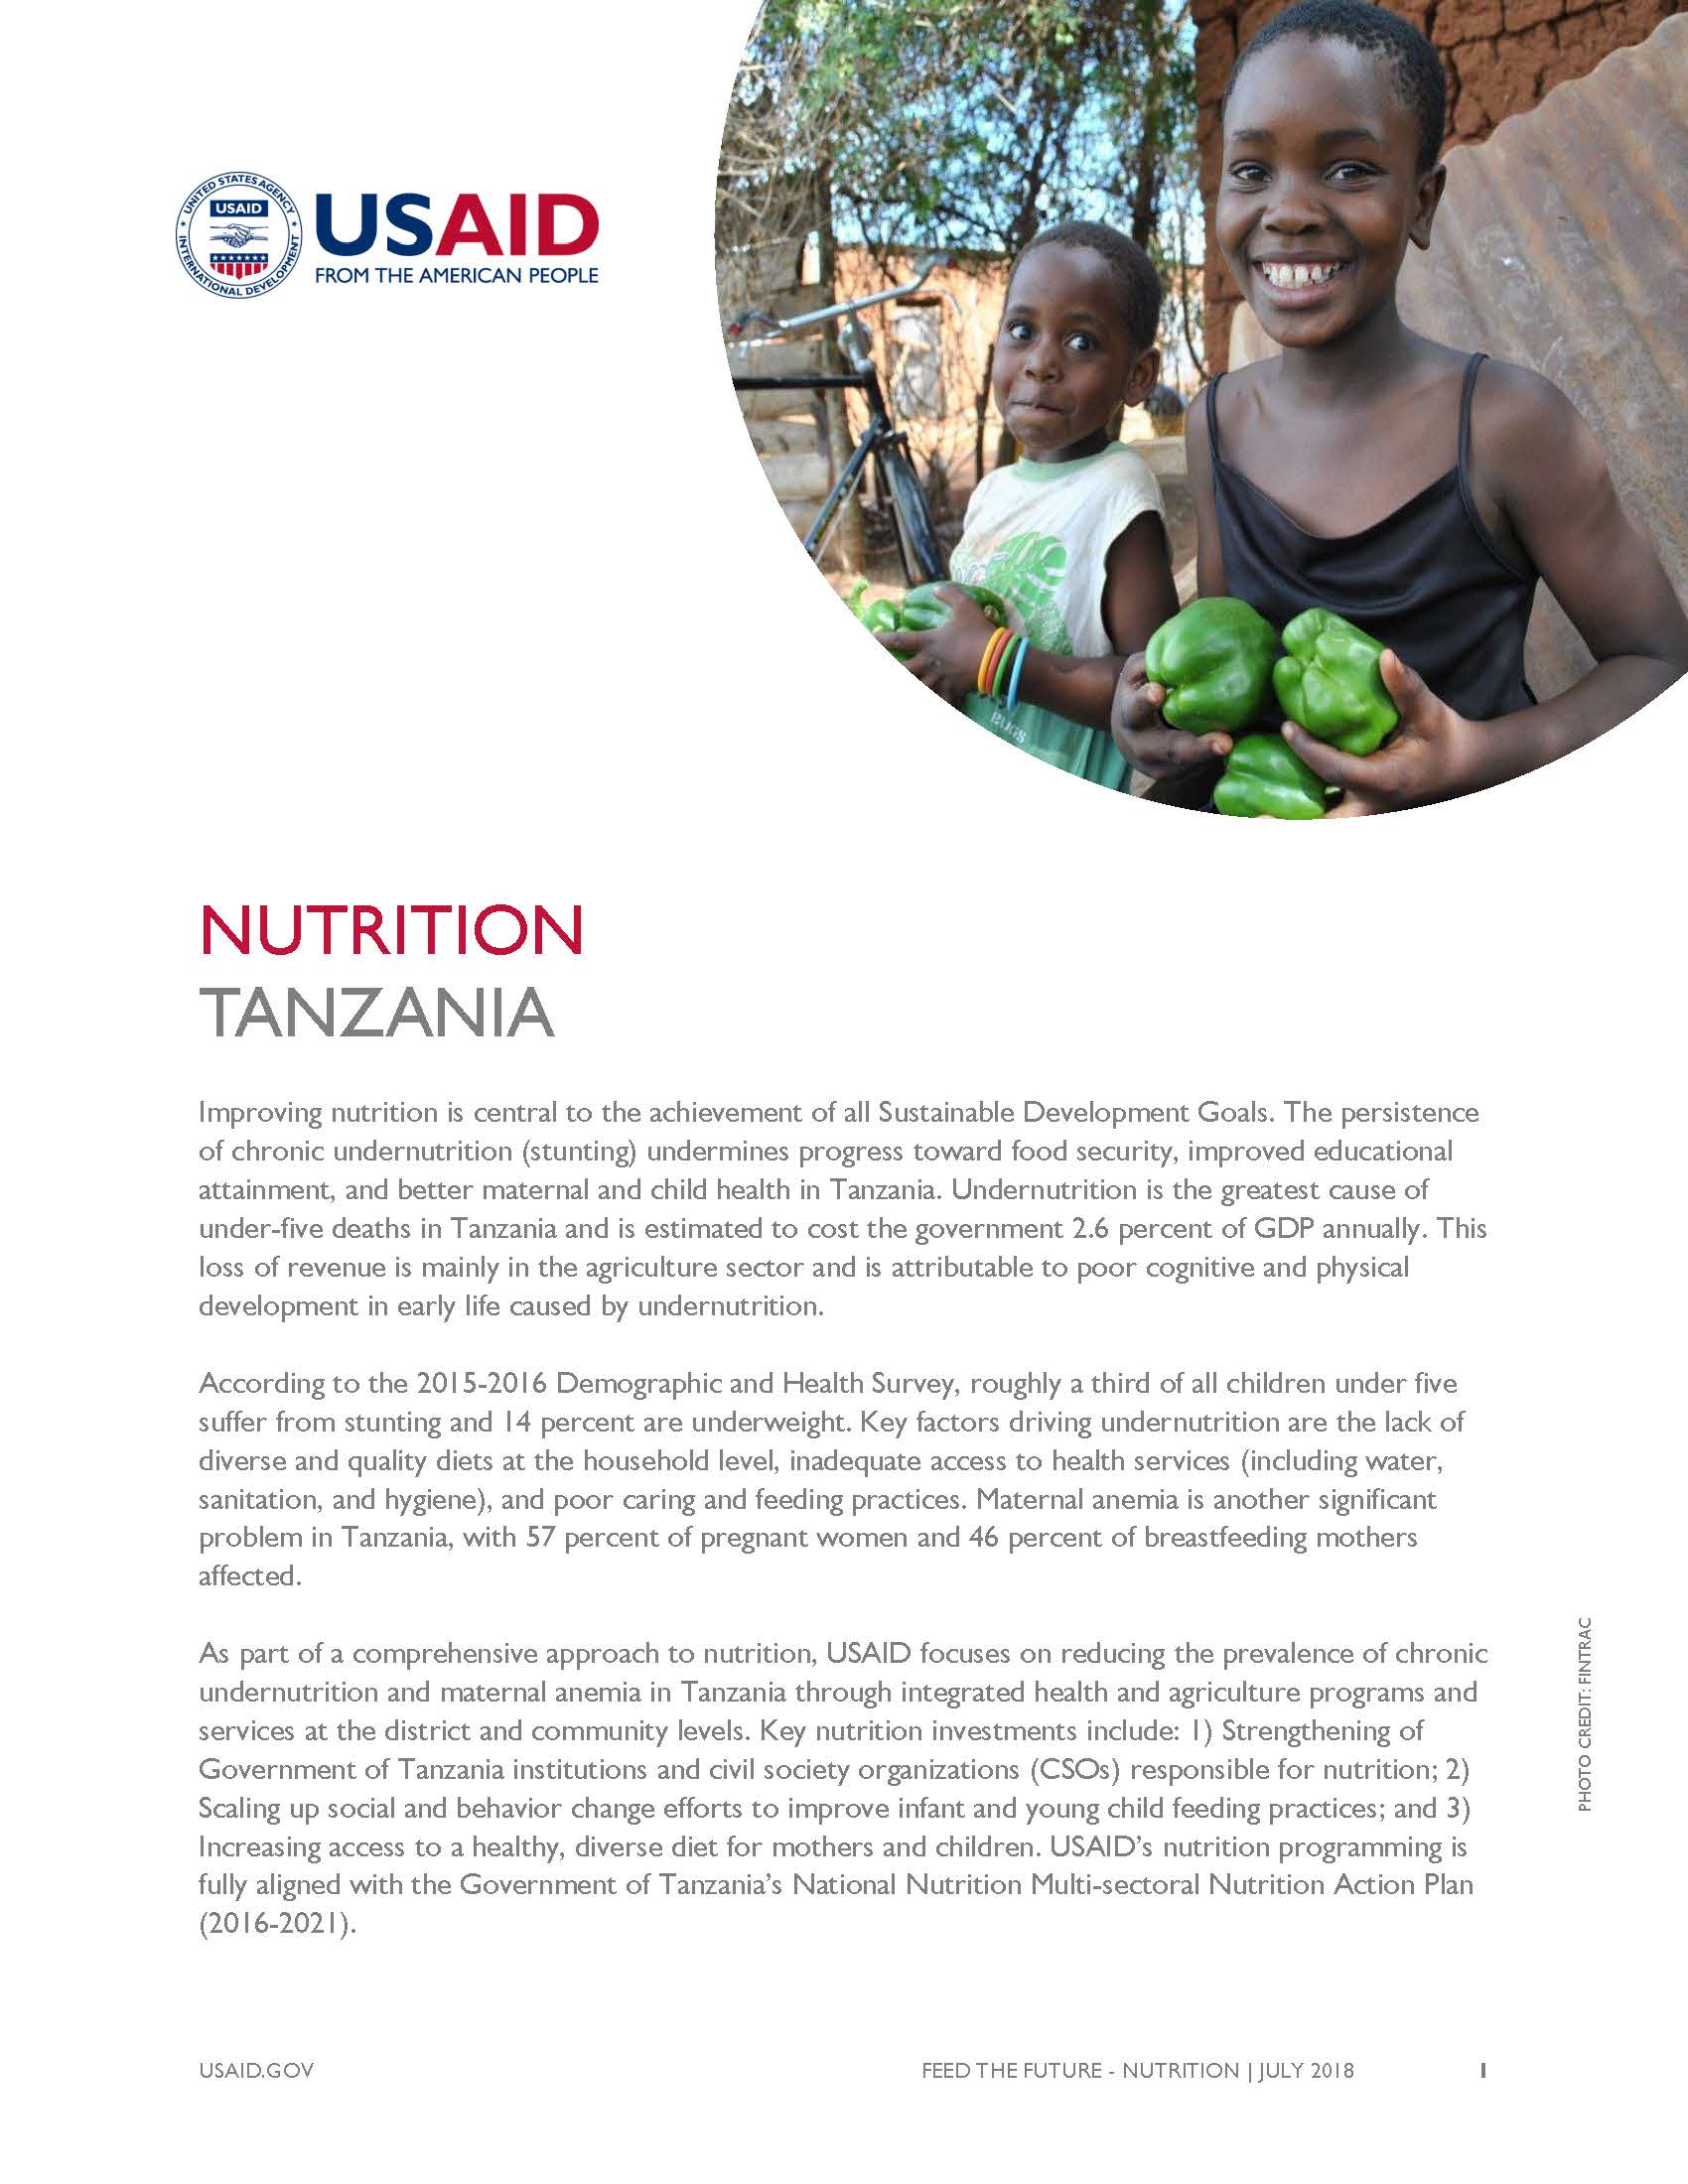 USAID Tanzania Nutrition Fact Sheet